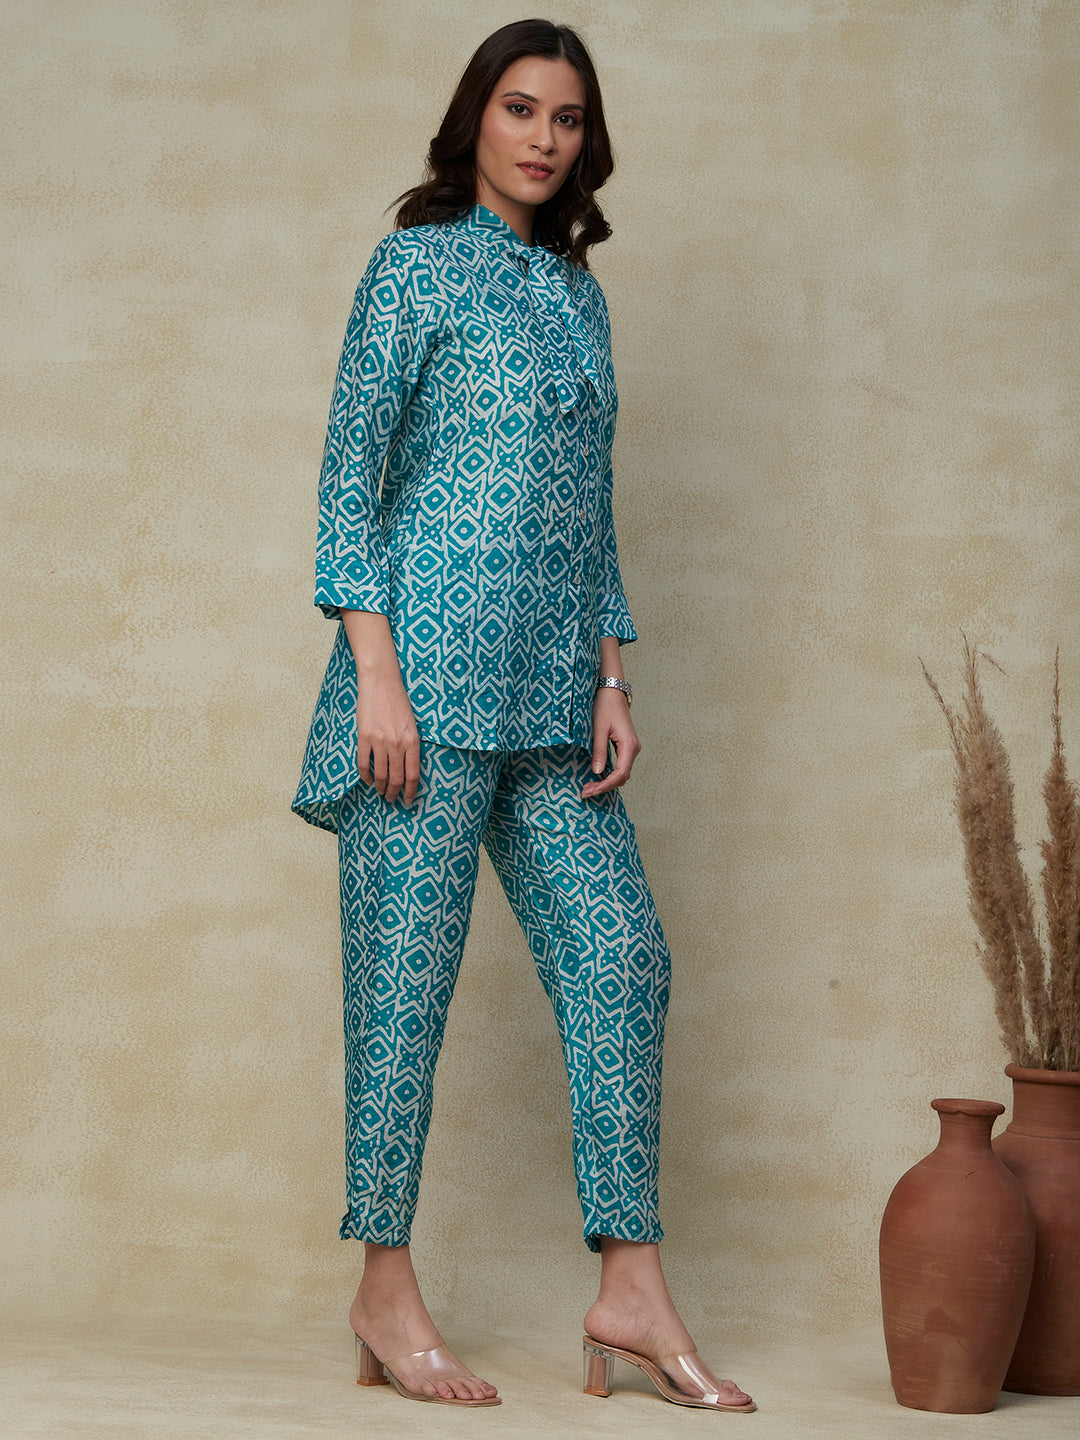 Abstract Batik Printed Asymmetric High-Low Hem Shirt with Pants Co-ord Set - Green